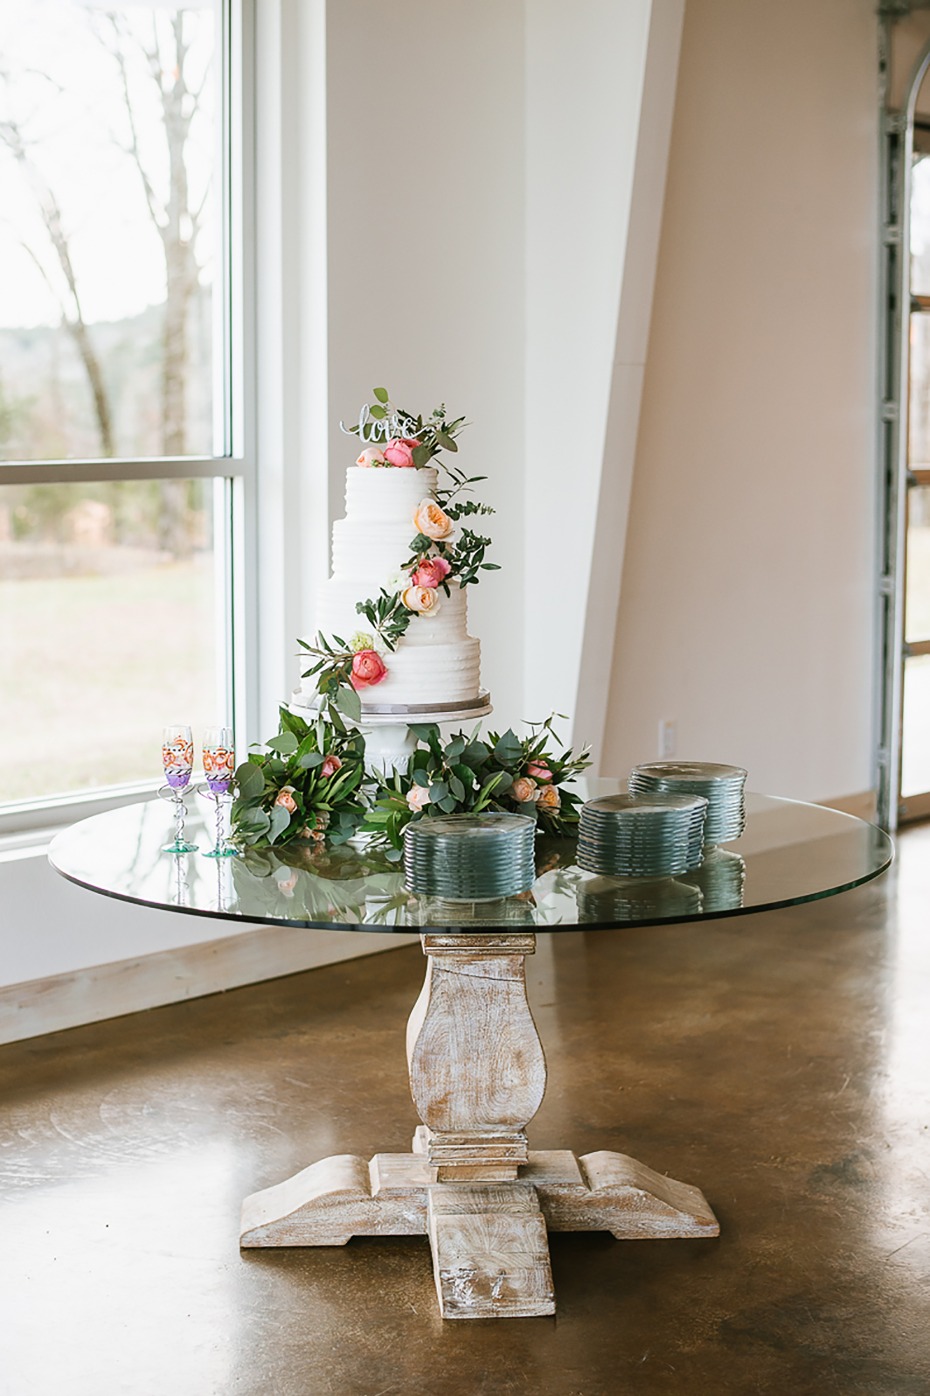 Elegant cake table